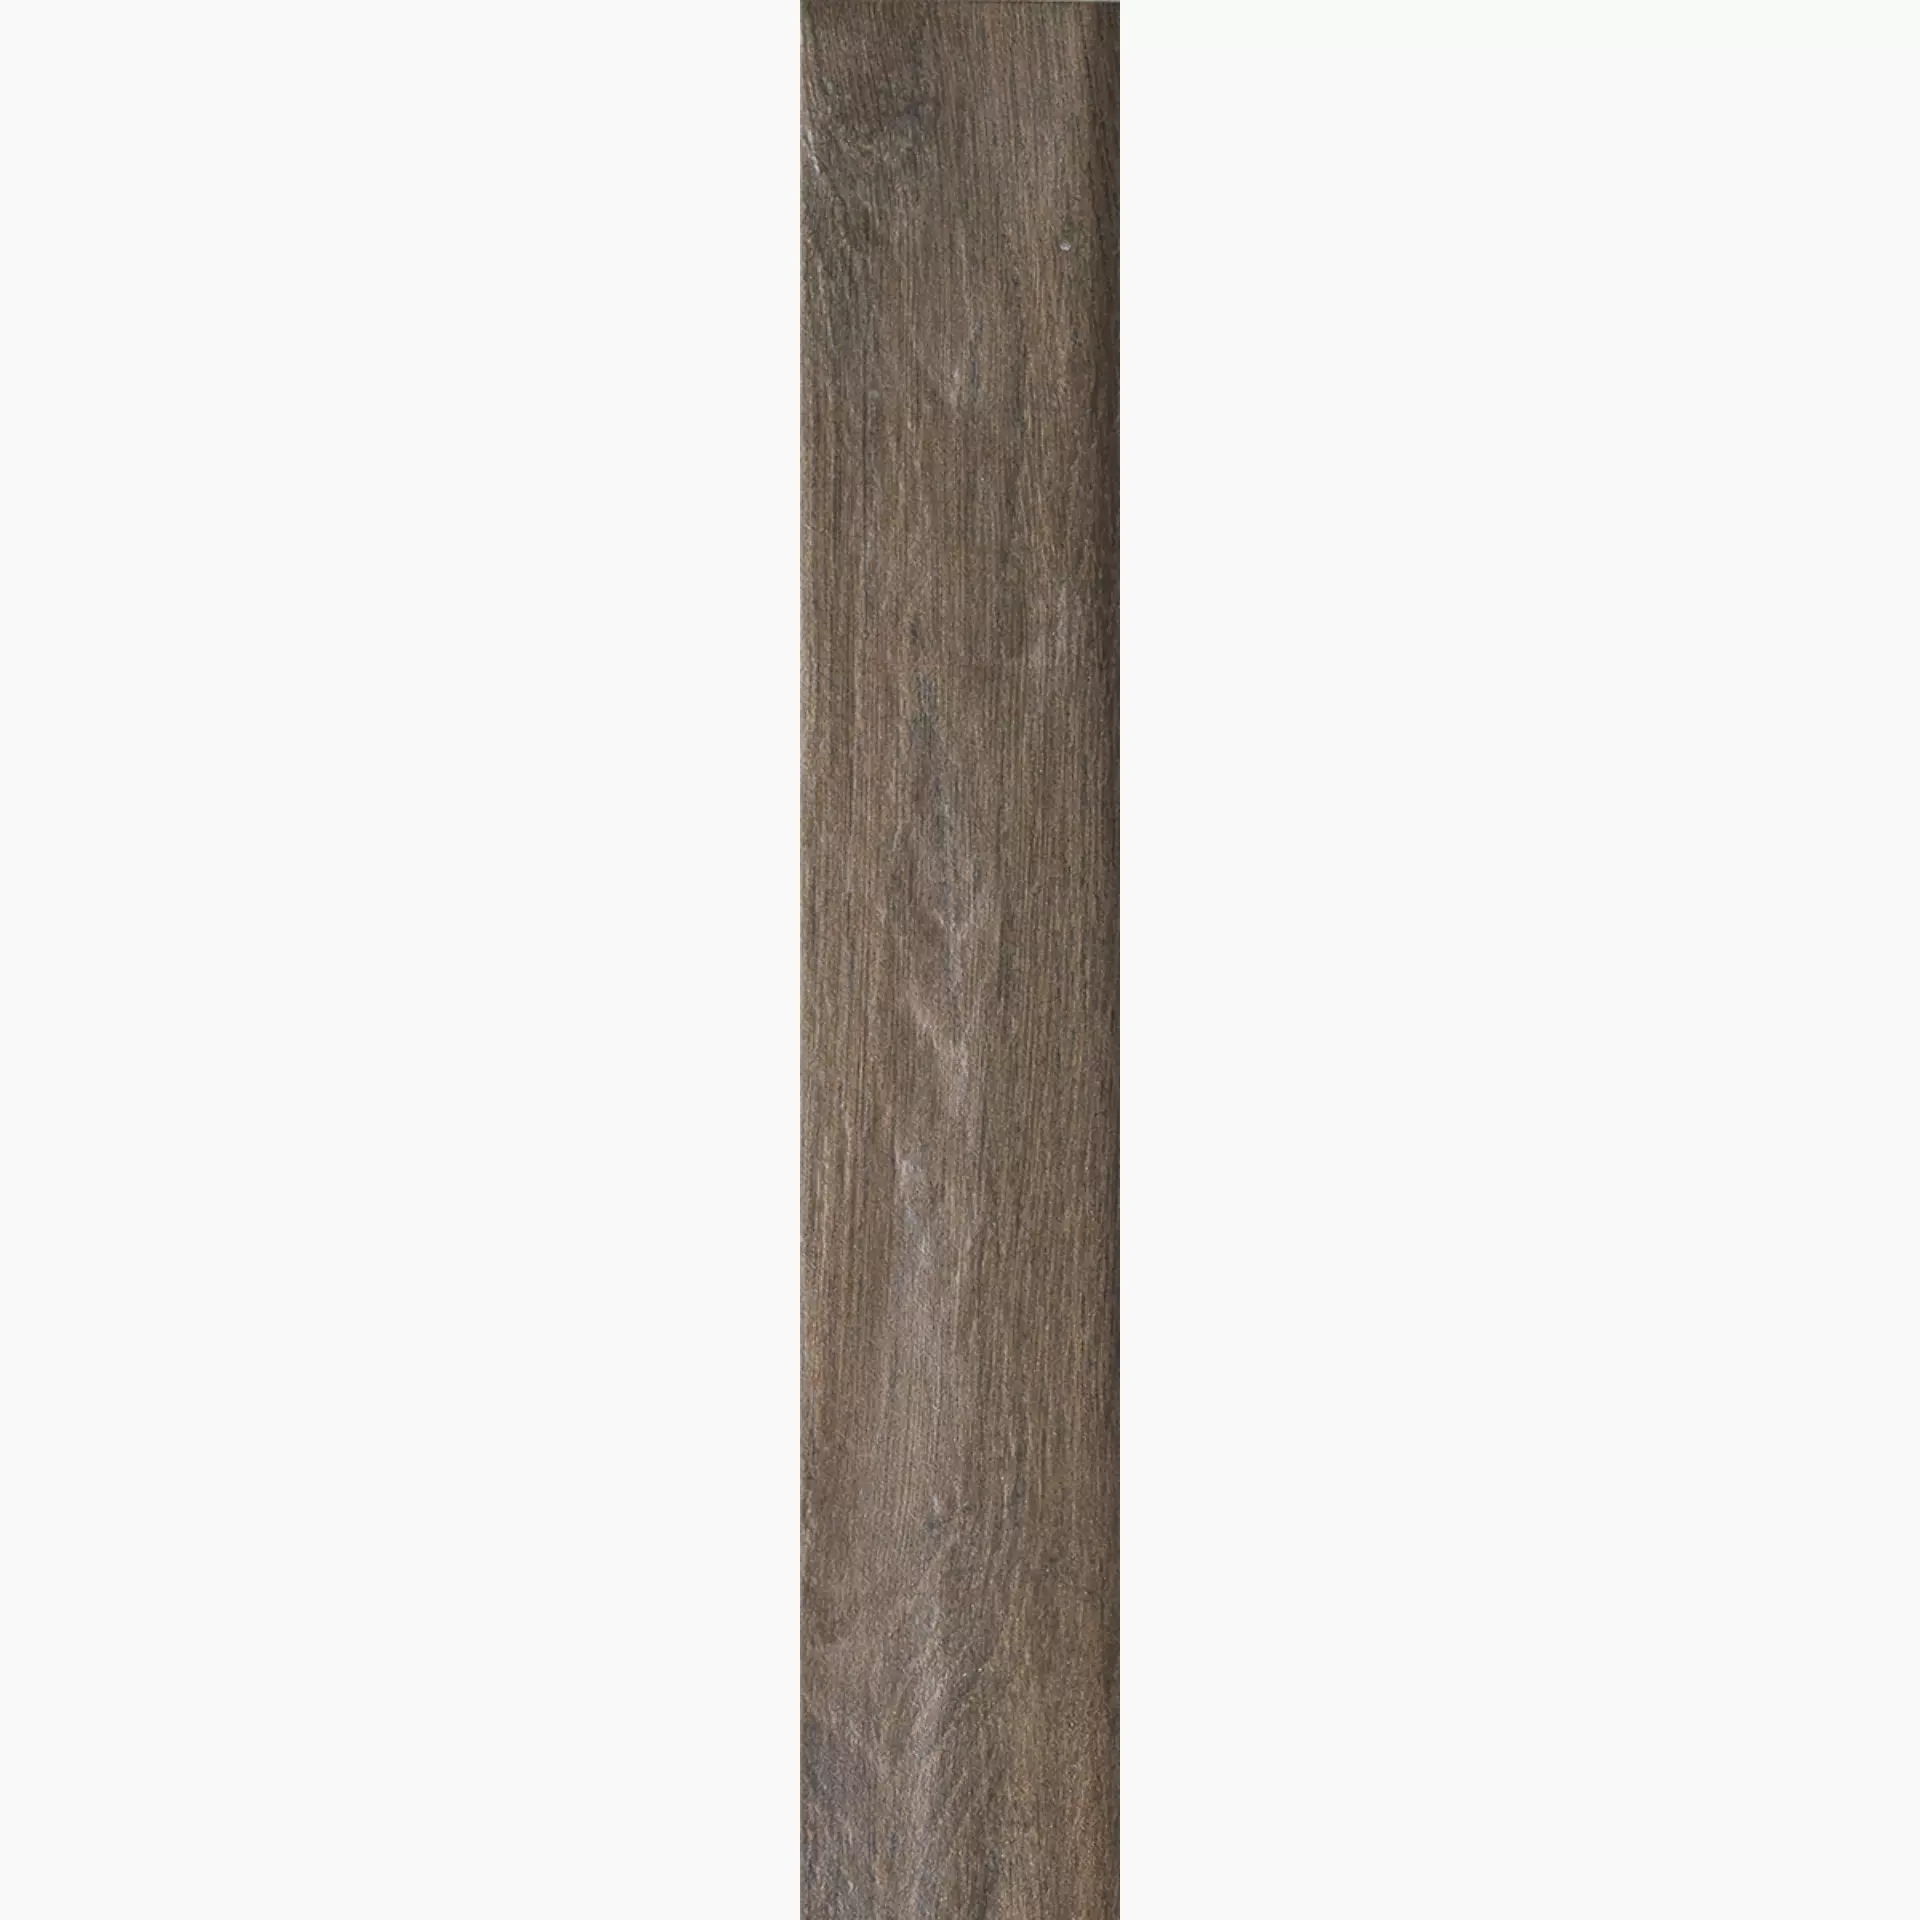 Rondine Vintage Brune Naturale J86579 7,5x45cm 9,5mm